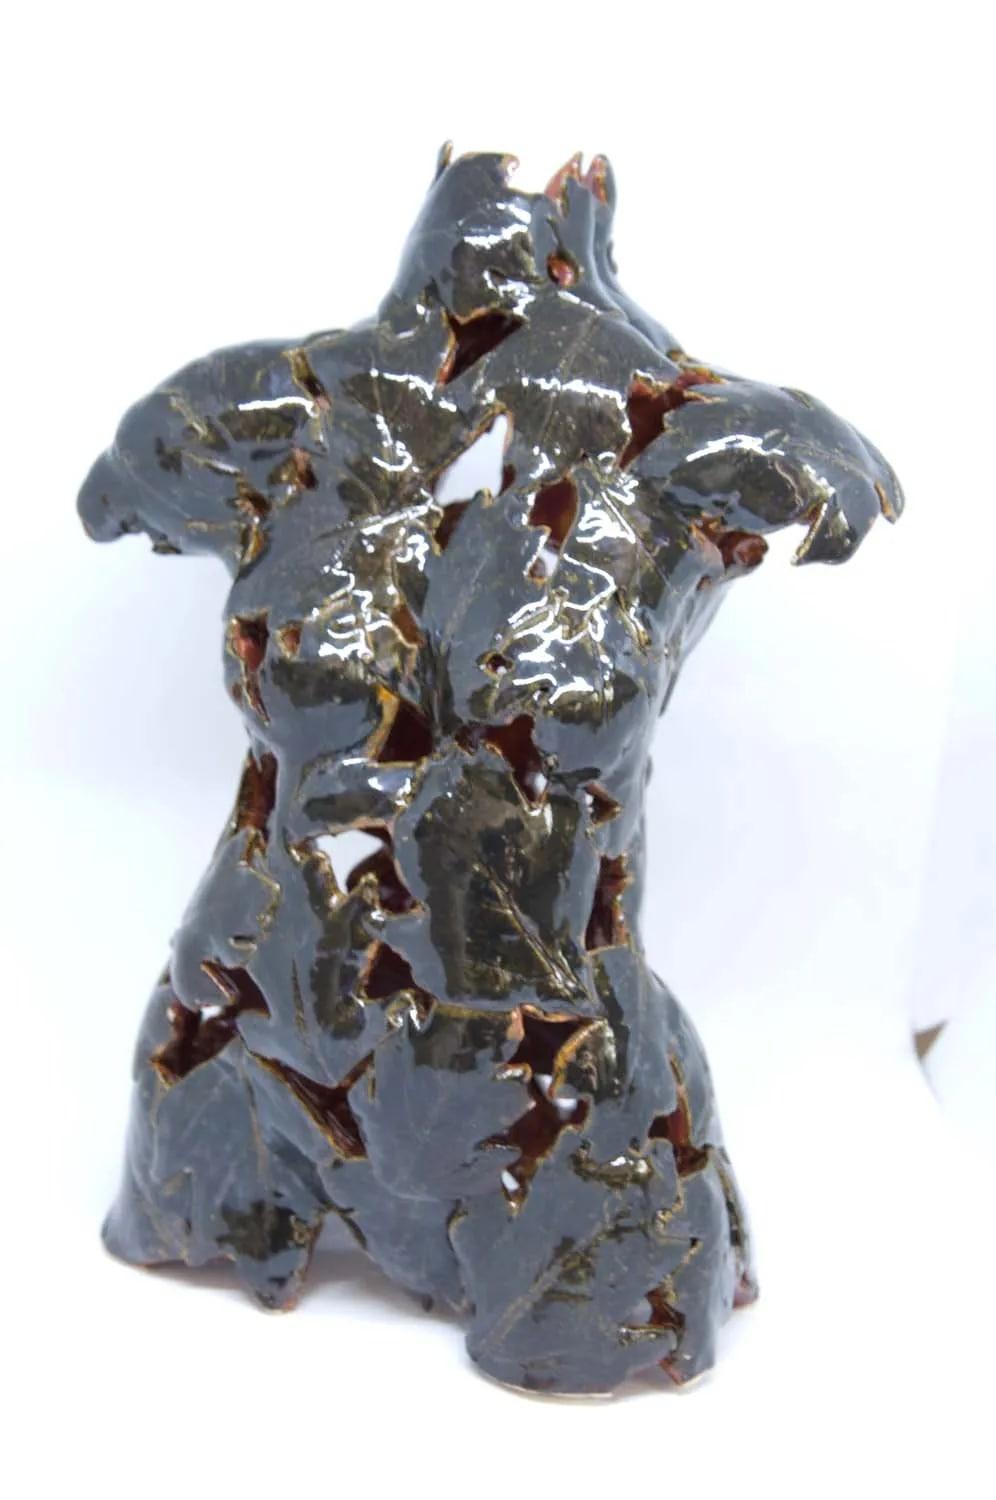 Linda Literal Figurative Sculpture - Figurative Expressionist Sculpture, "Armor: Protection Series Small 5"